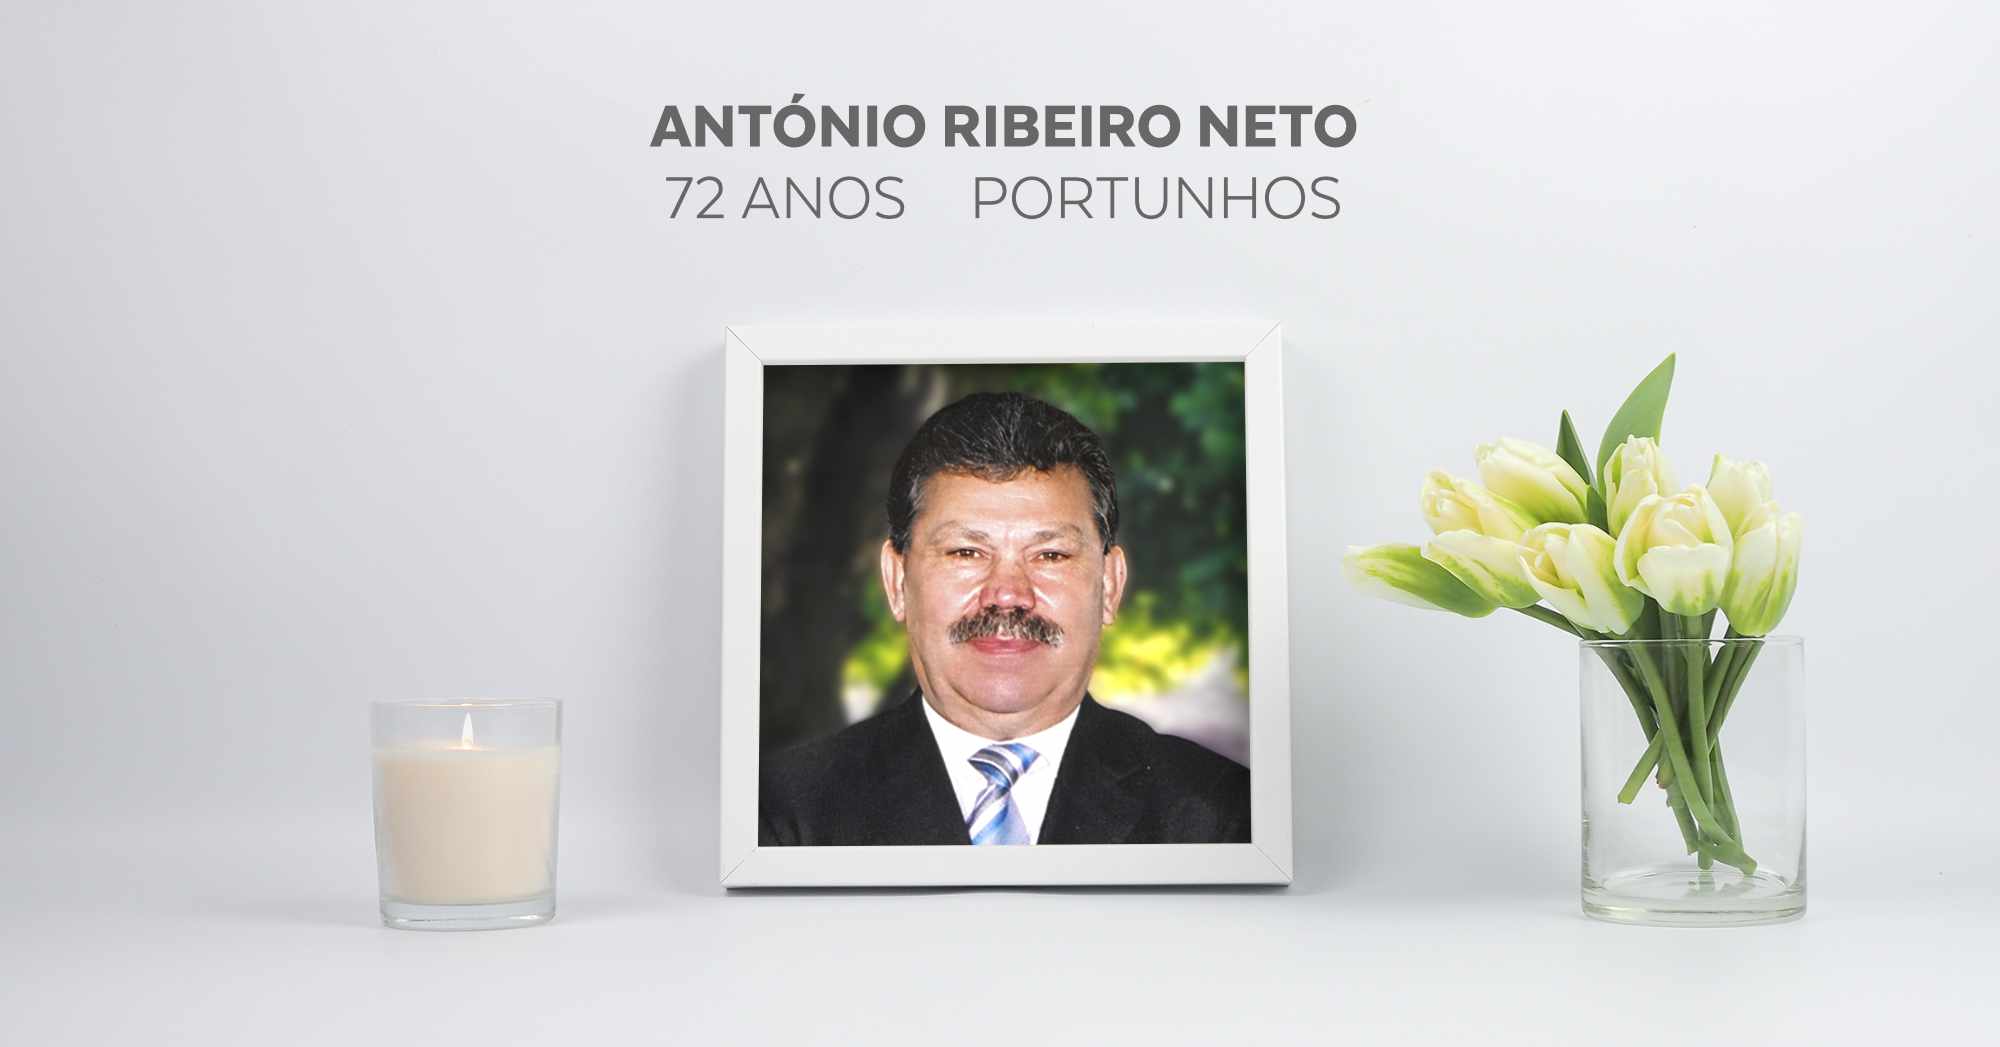 António Ribeiro Neto